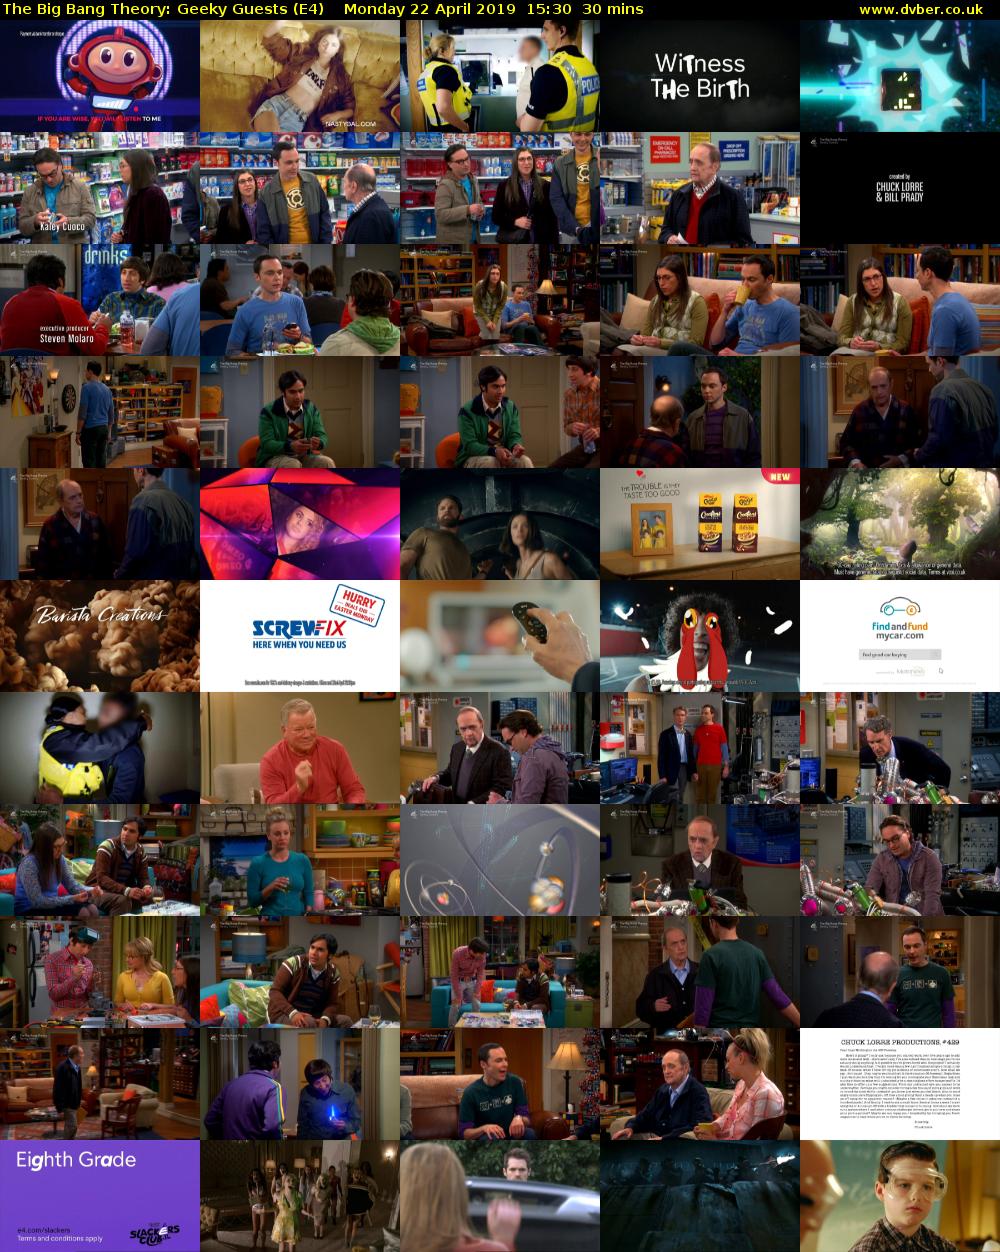 The Big Bang Theory: Geeky Guests (E4) Monday 22 April 2019 15:30 - 16:00